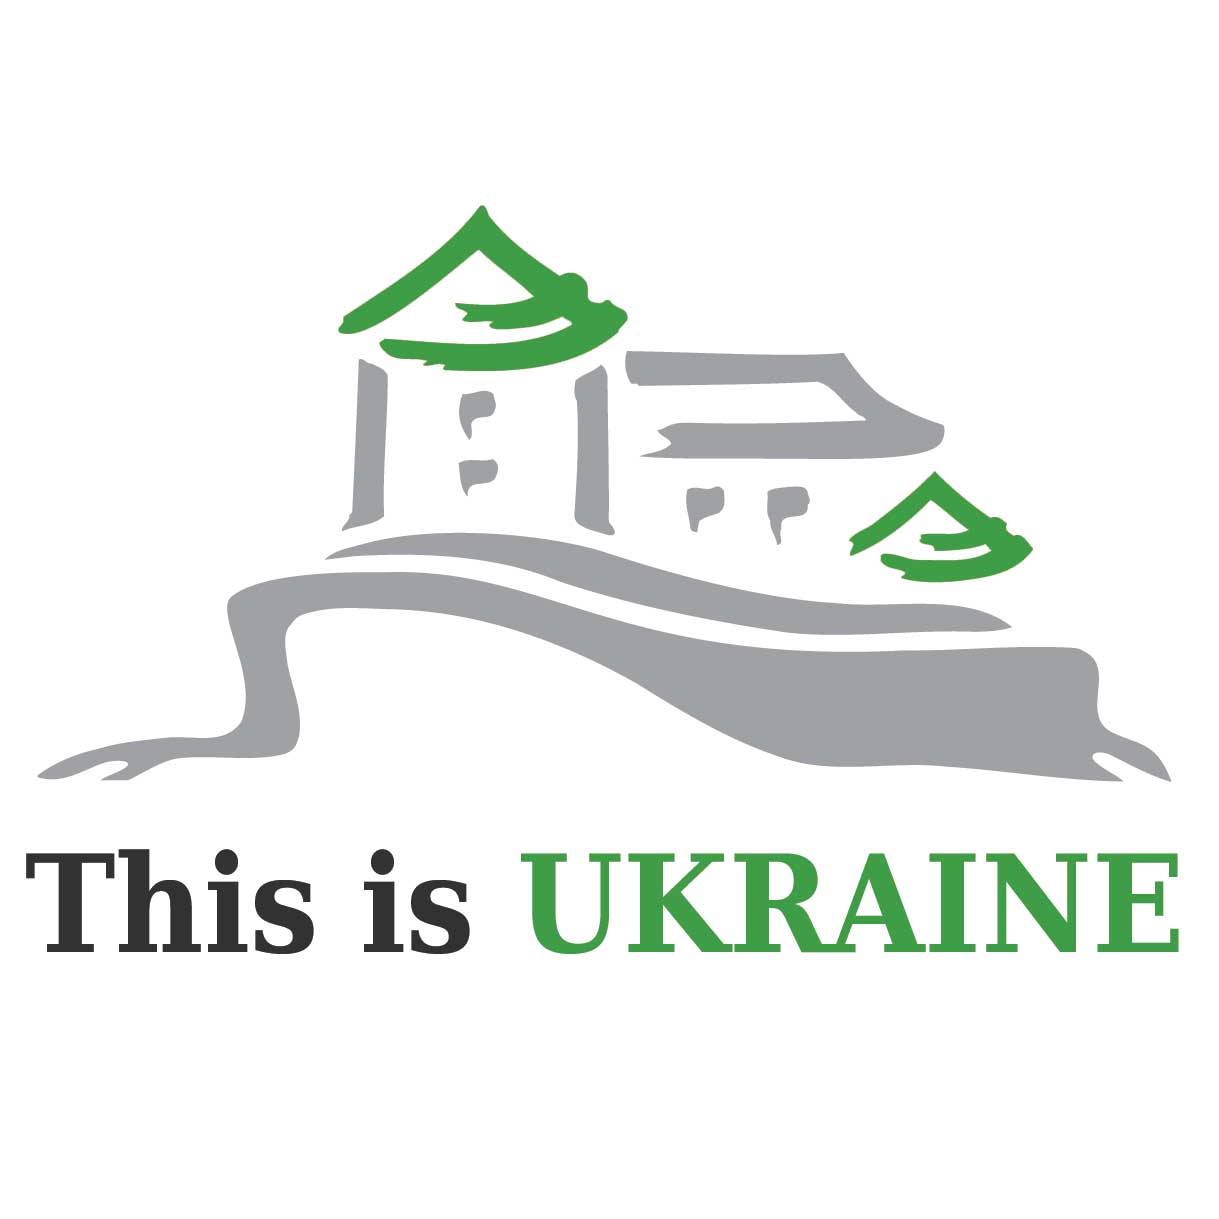 This is Ukraine